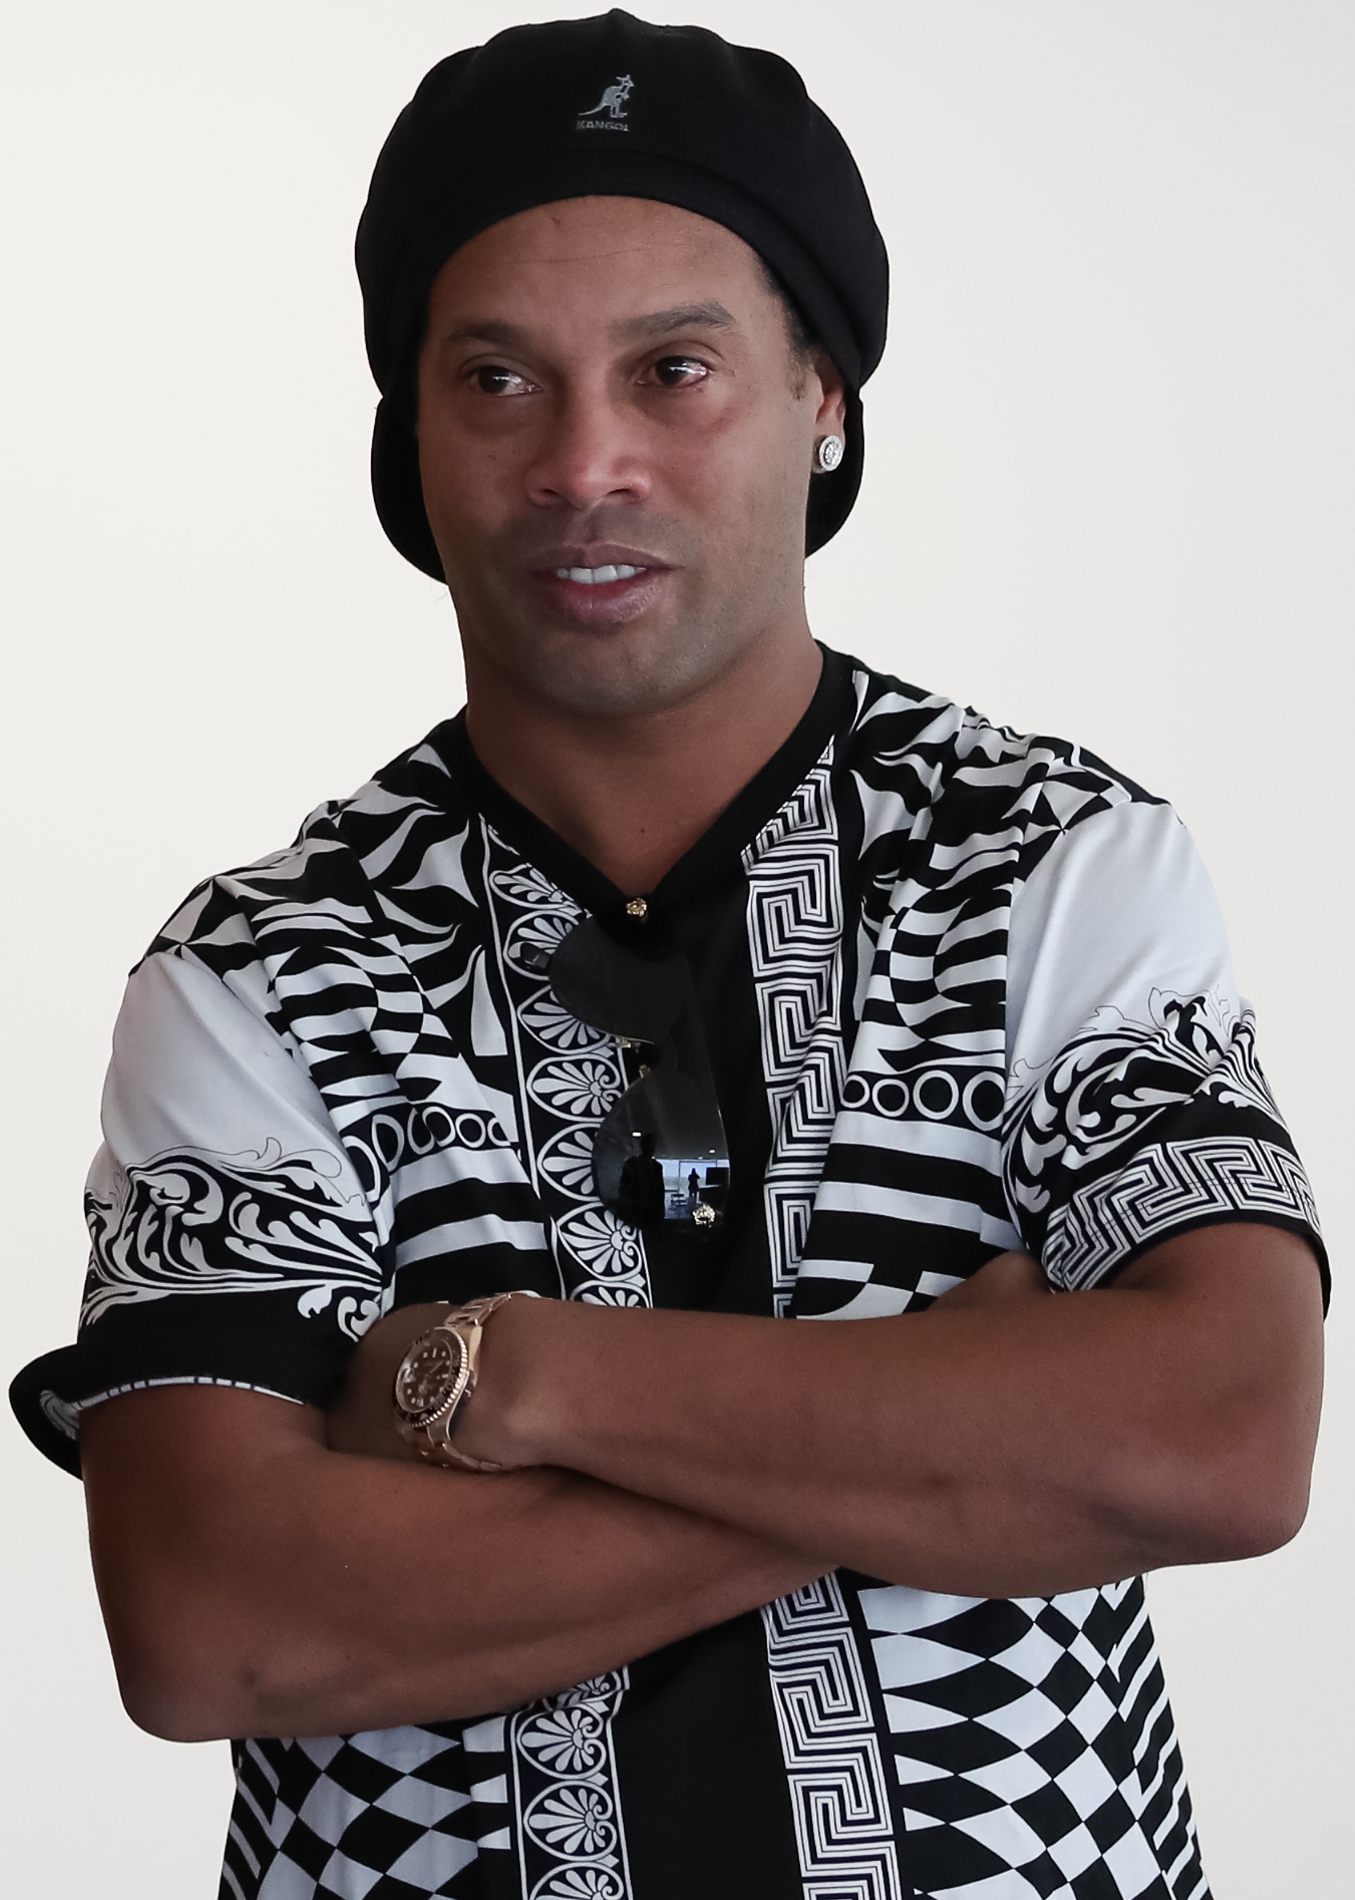 Ronaldinho Gaúcho - Wikipedio